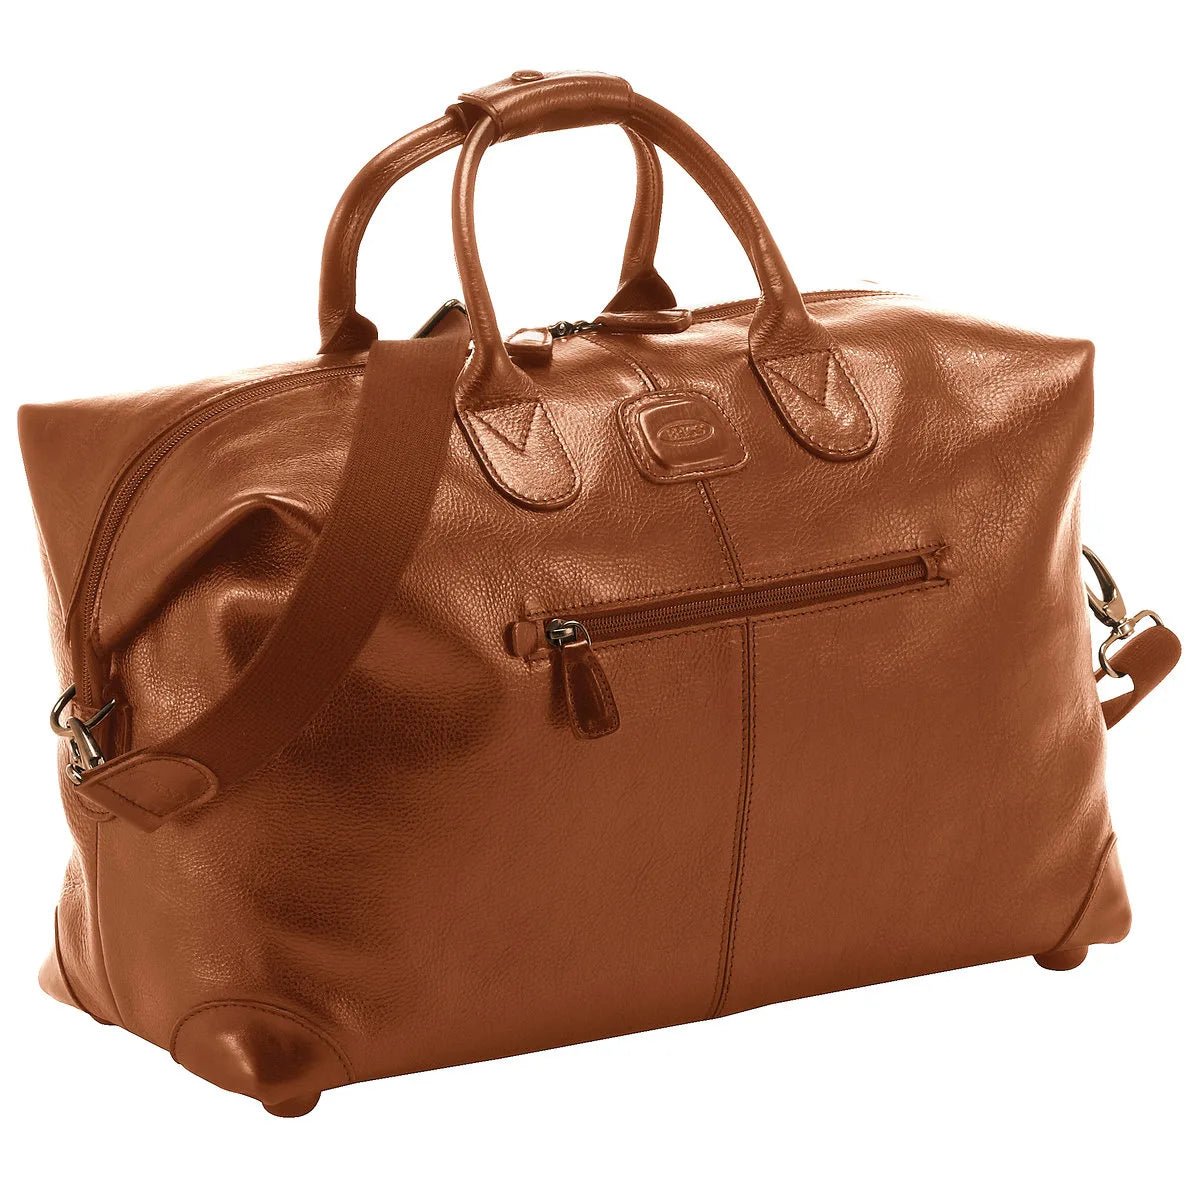 Brics Life Pelle leather travel bag 46 cm - cognac